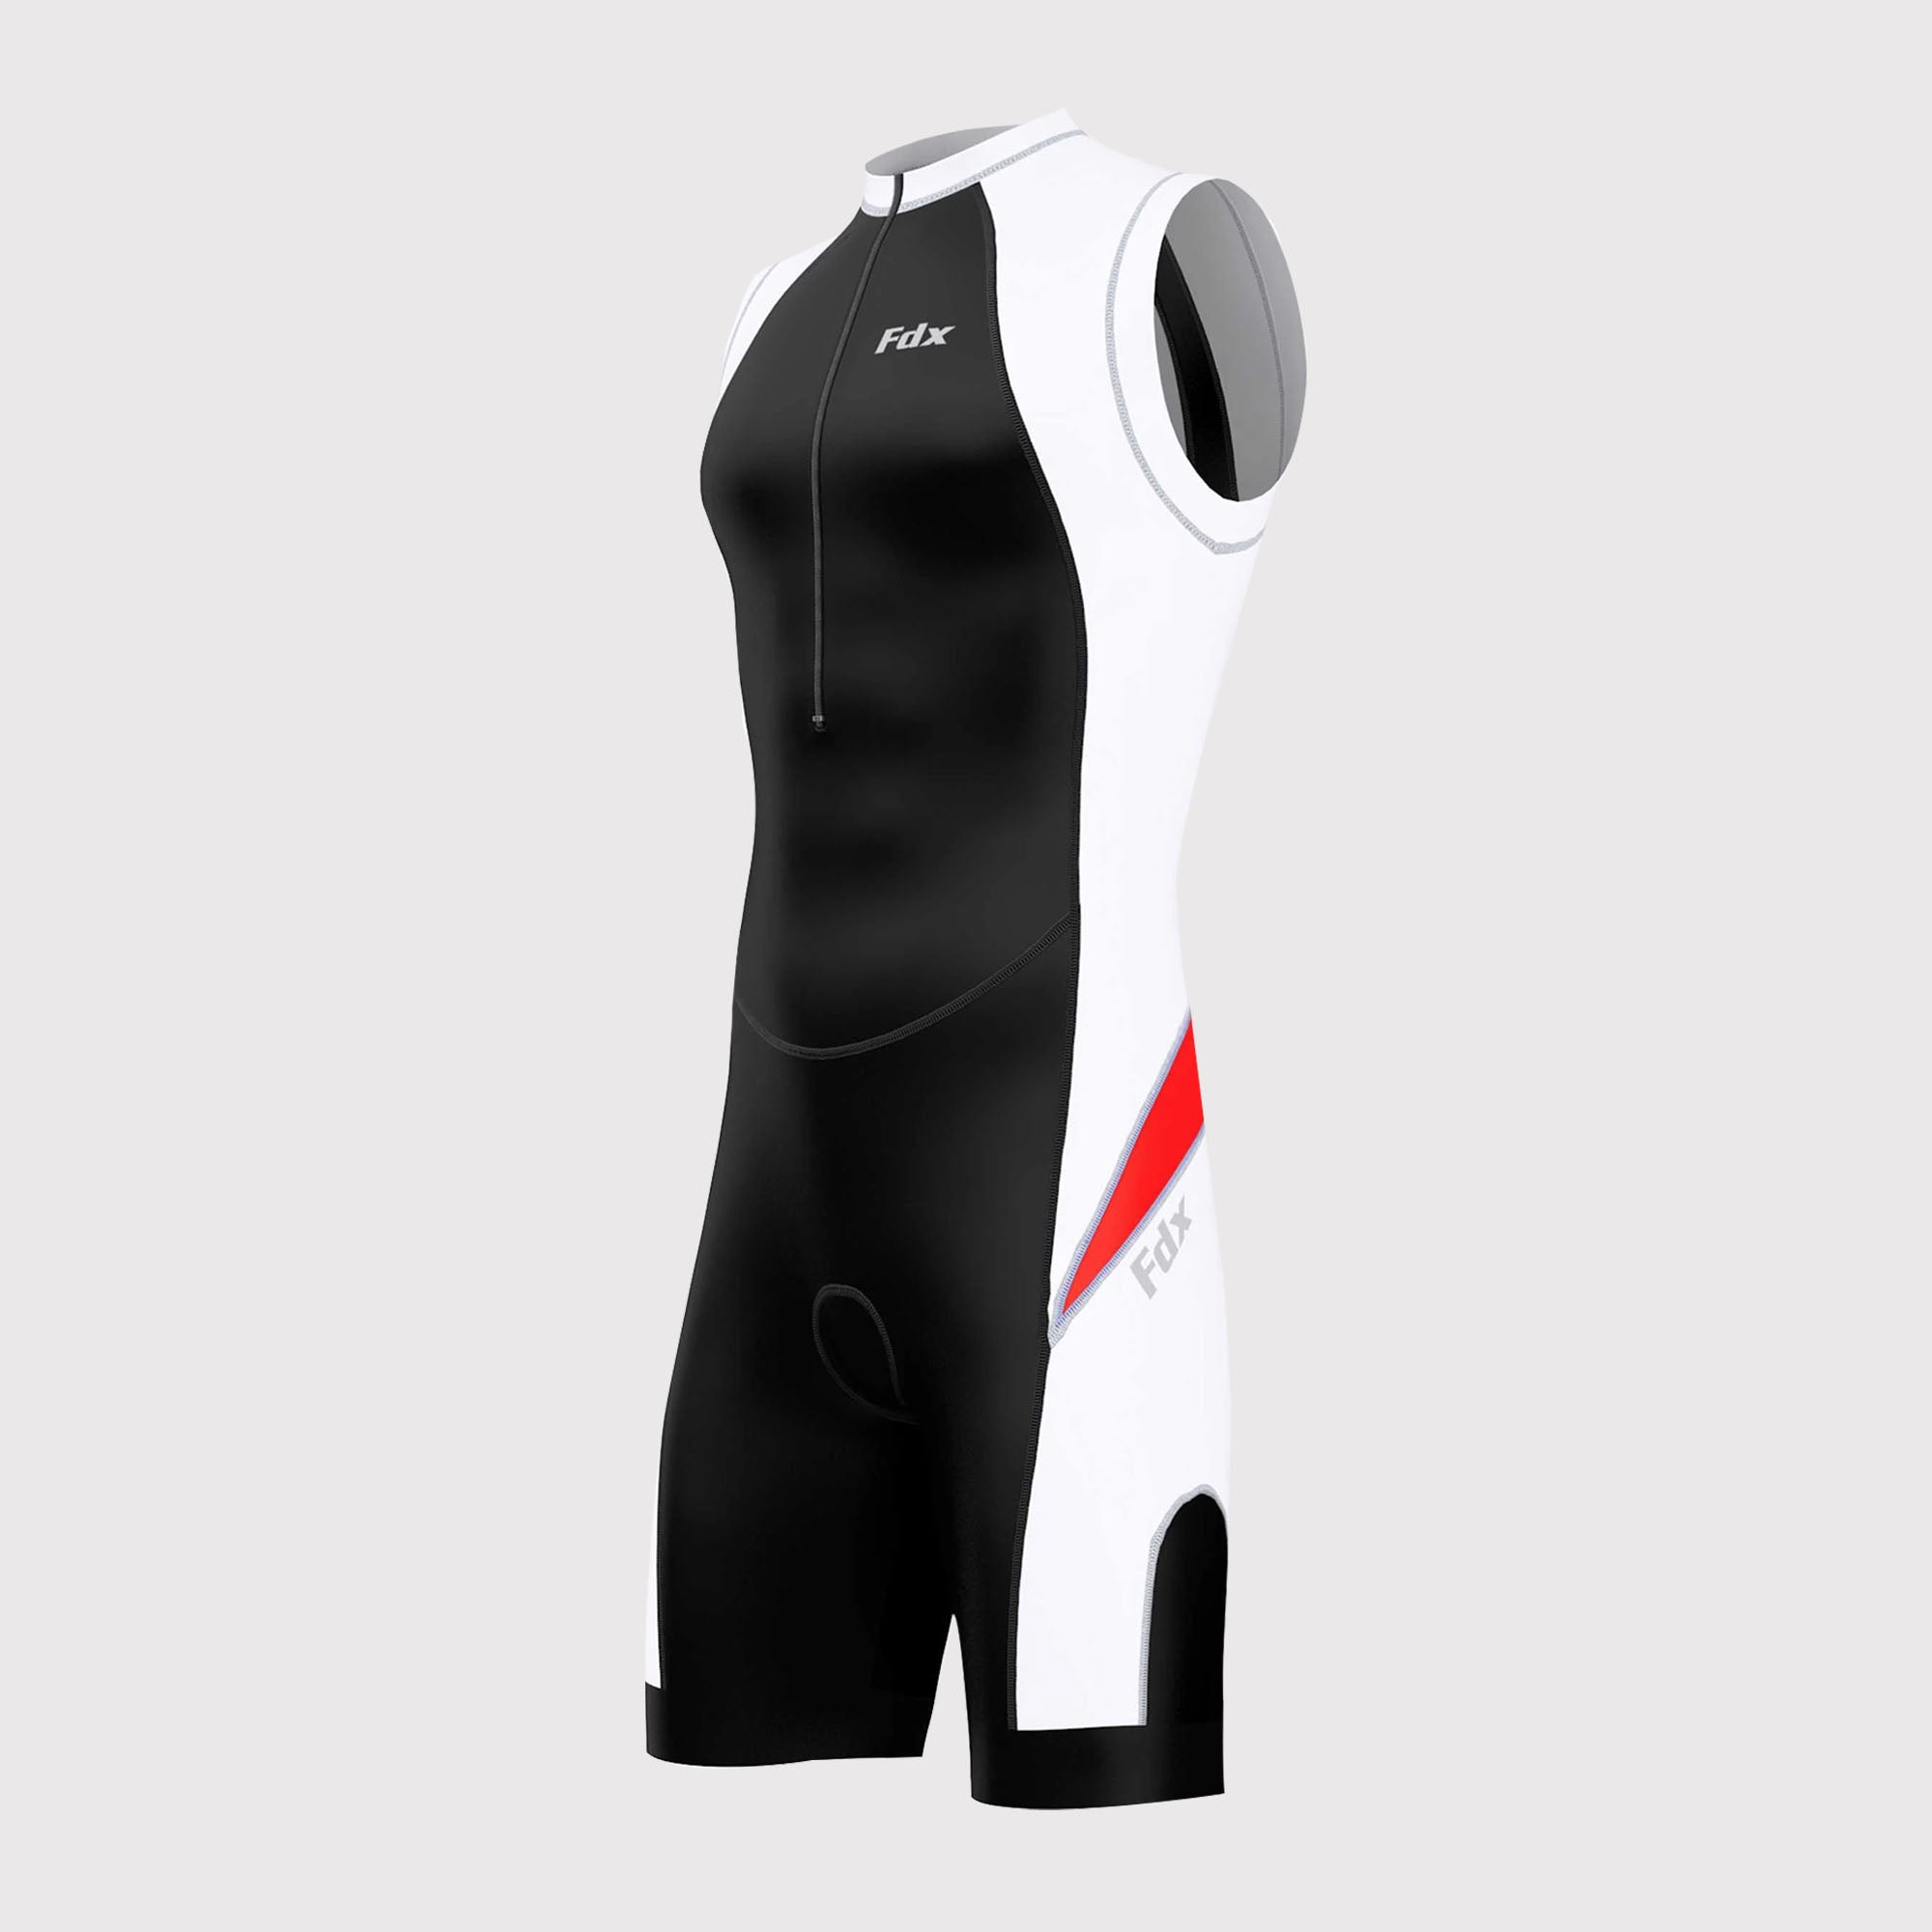 Fdx Mens Black & Red Sleeveless Gel Padded Triathlon / Skin Suit for Summer Cycling Wear, Runnung & Swimming Half Zip - Zion